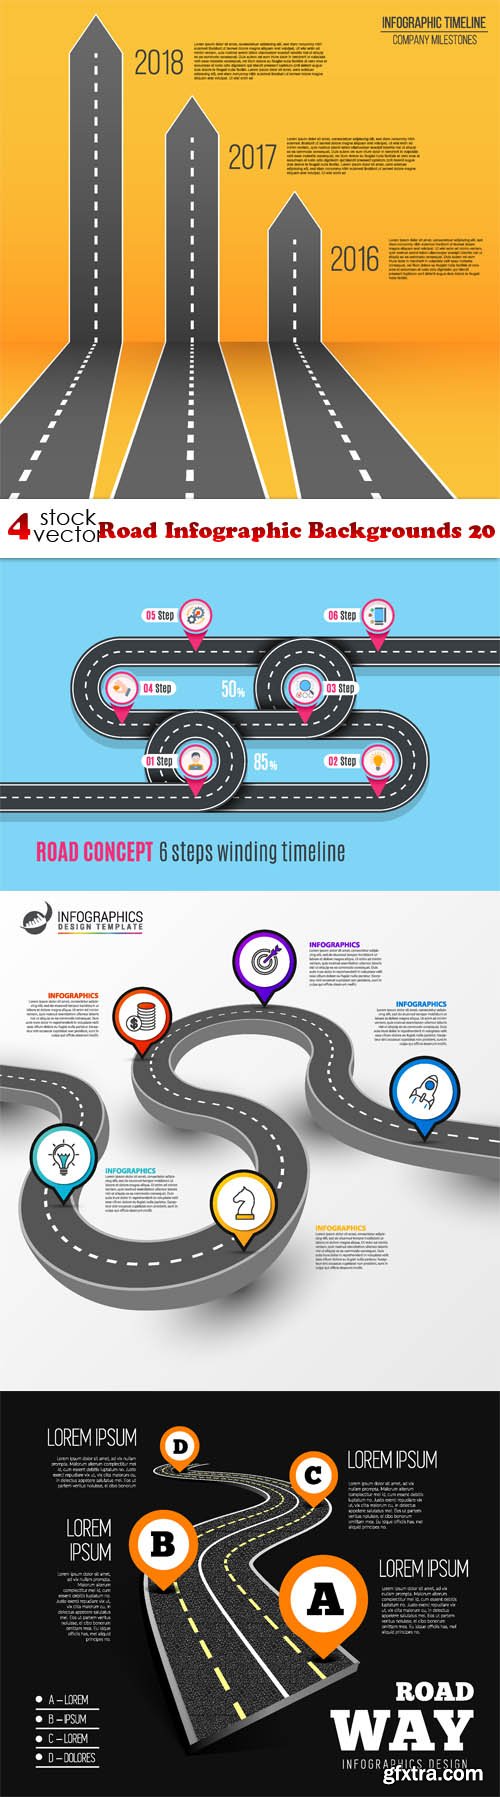 Vectors - Road Infographic Backgrounds 20